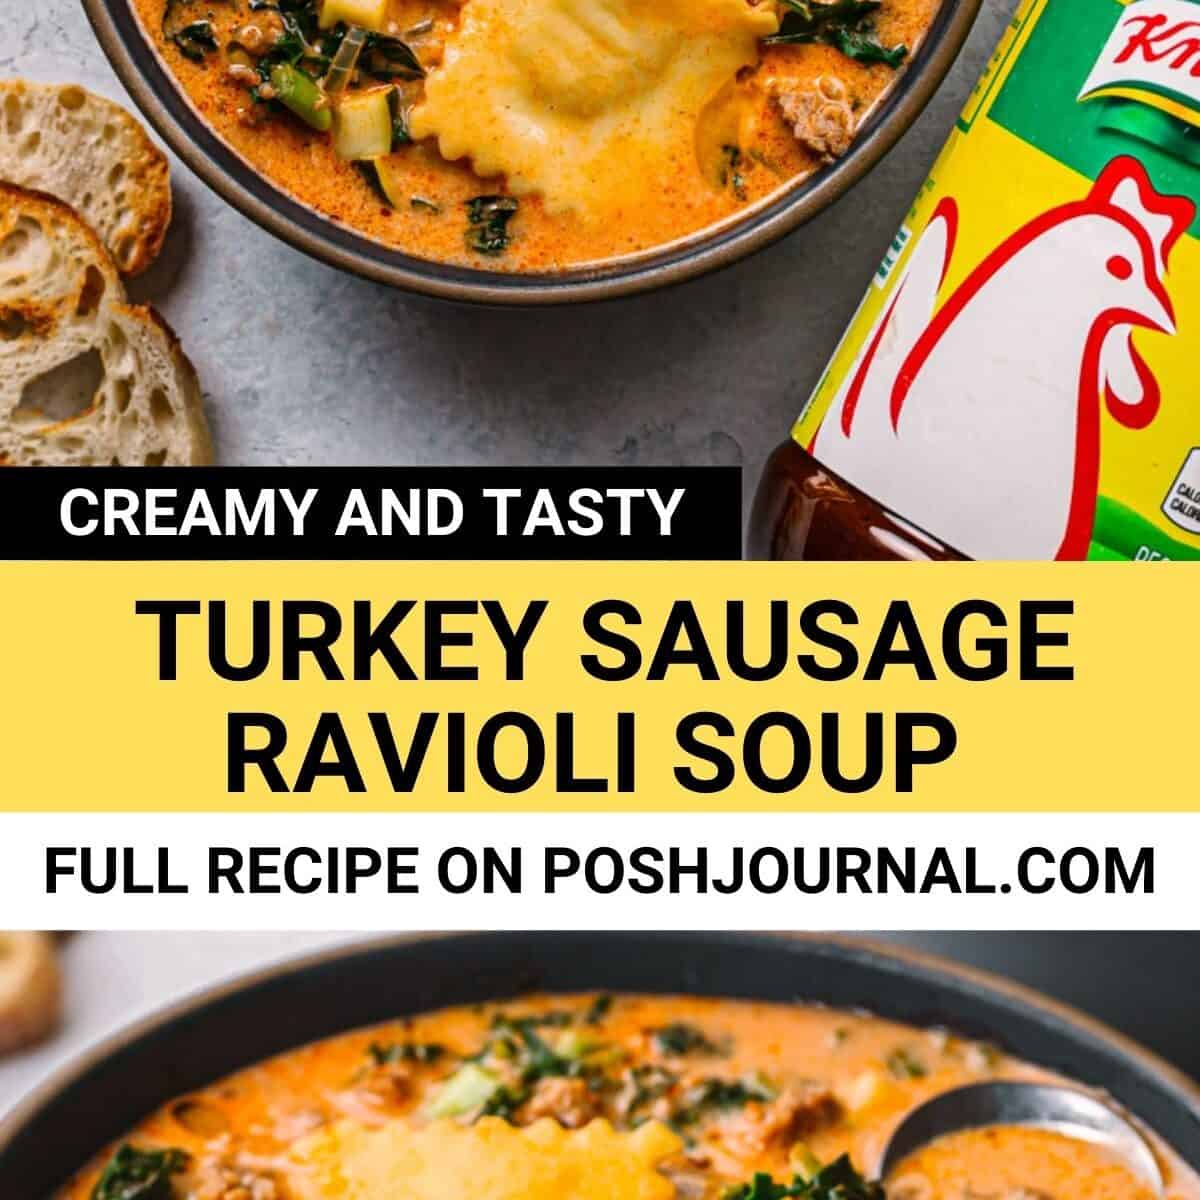 creamy ravioli soup